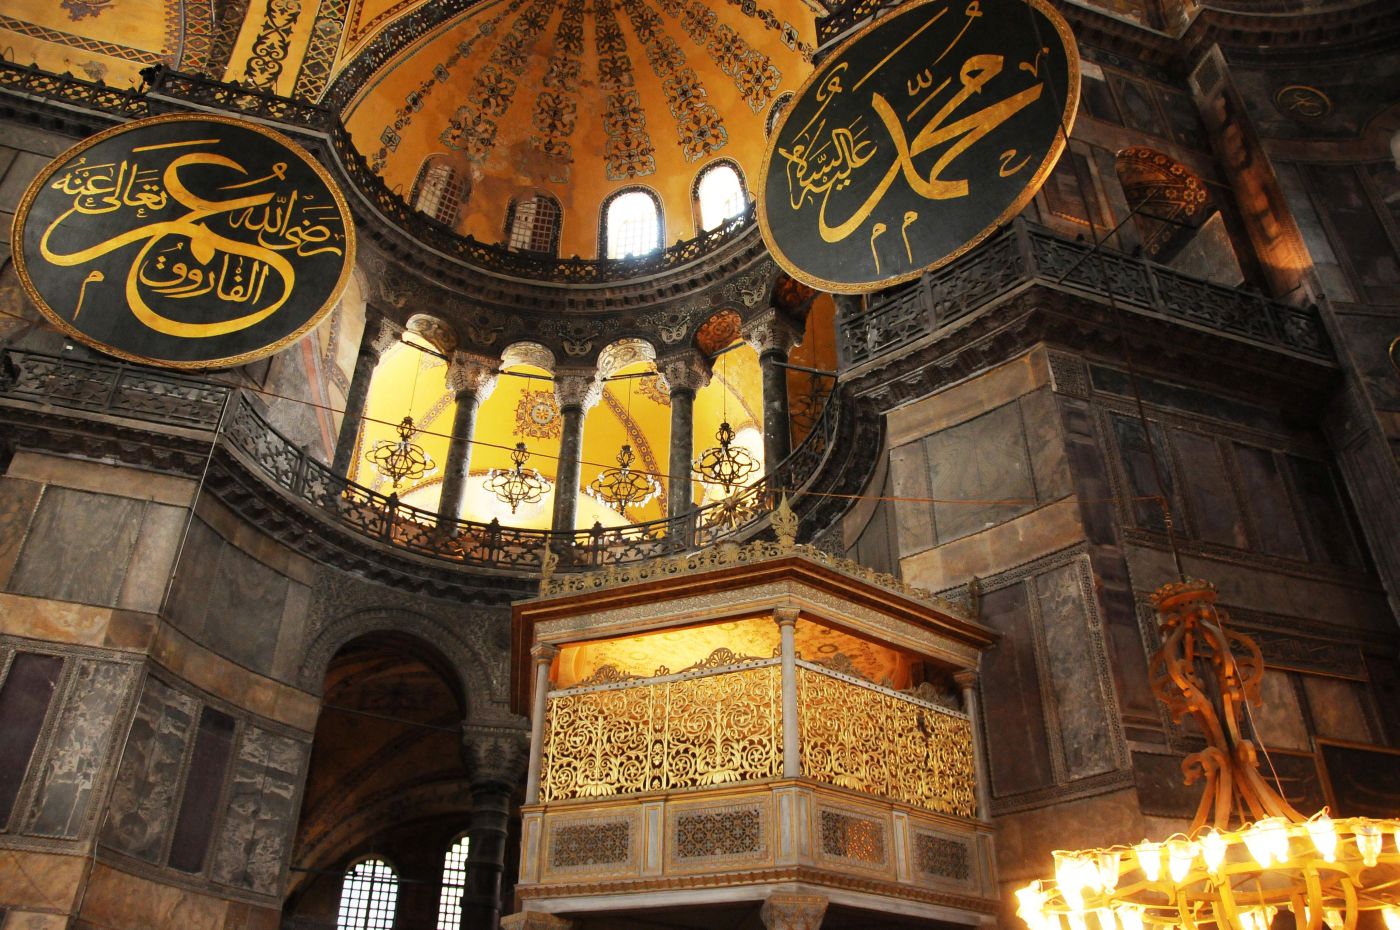 Greek Orthodox cathederal Hagia Sophia in Istanbul, Turkey